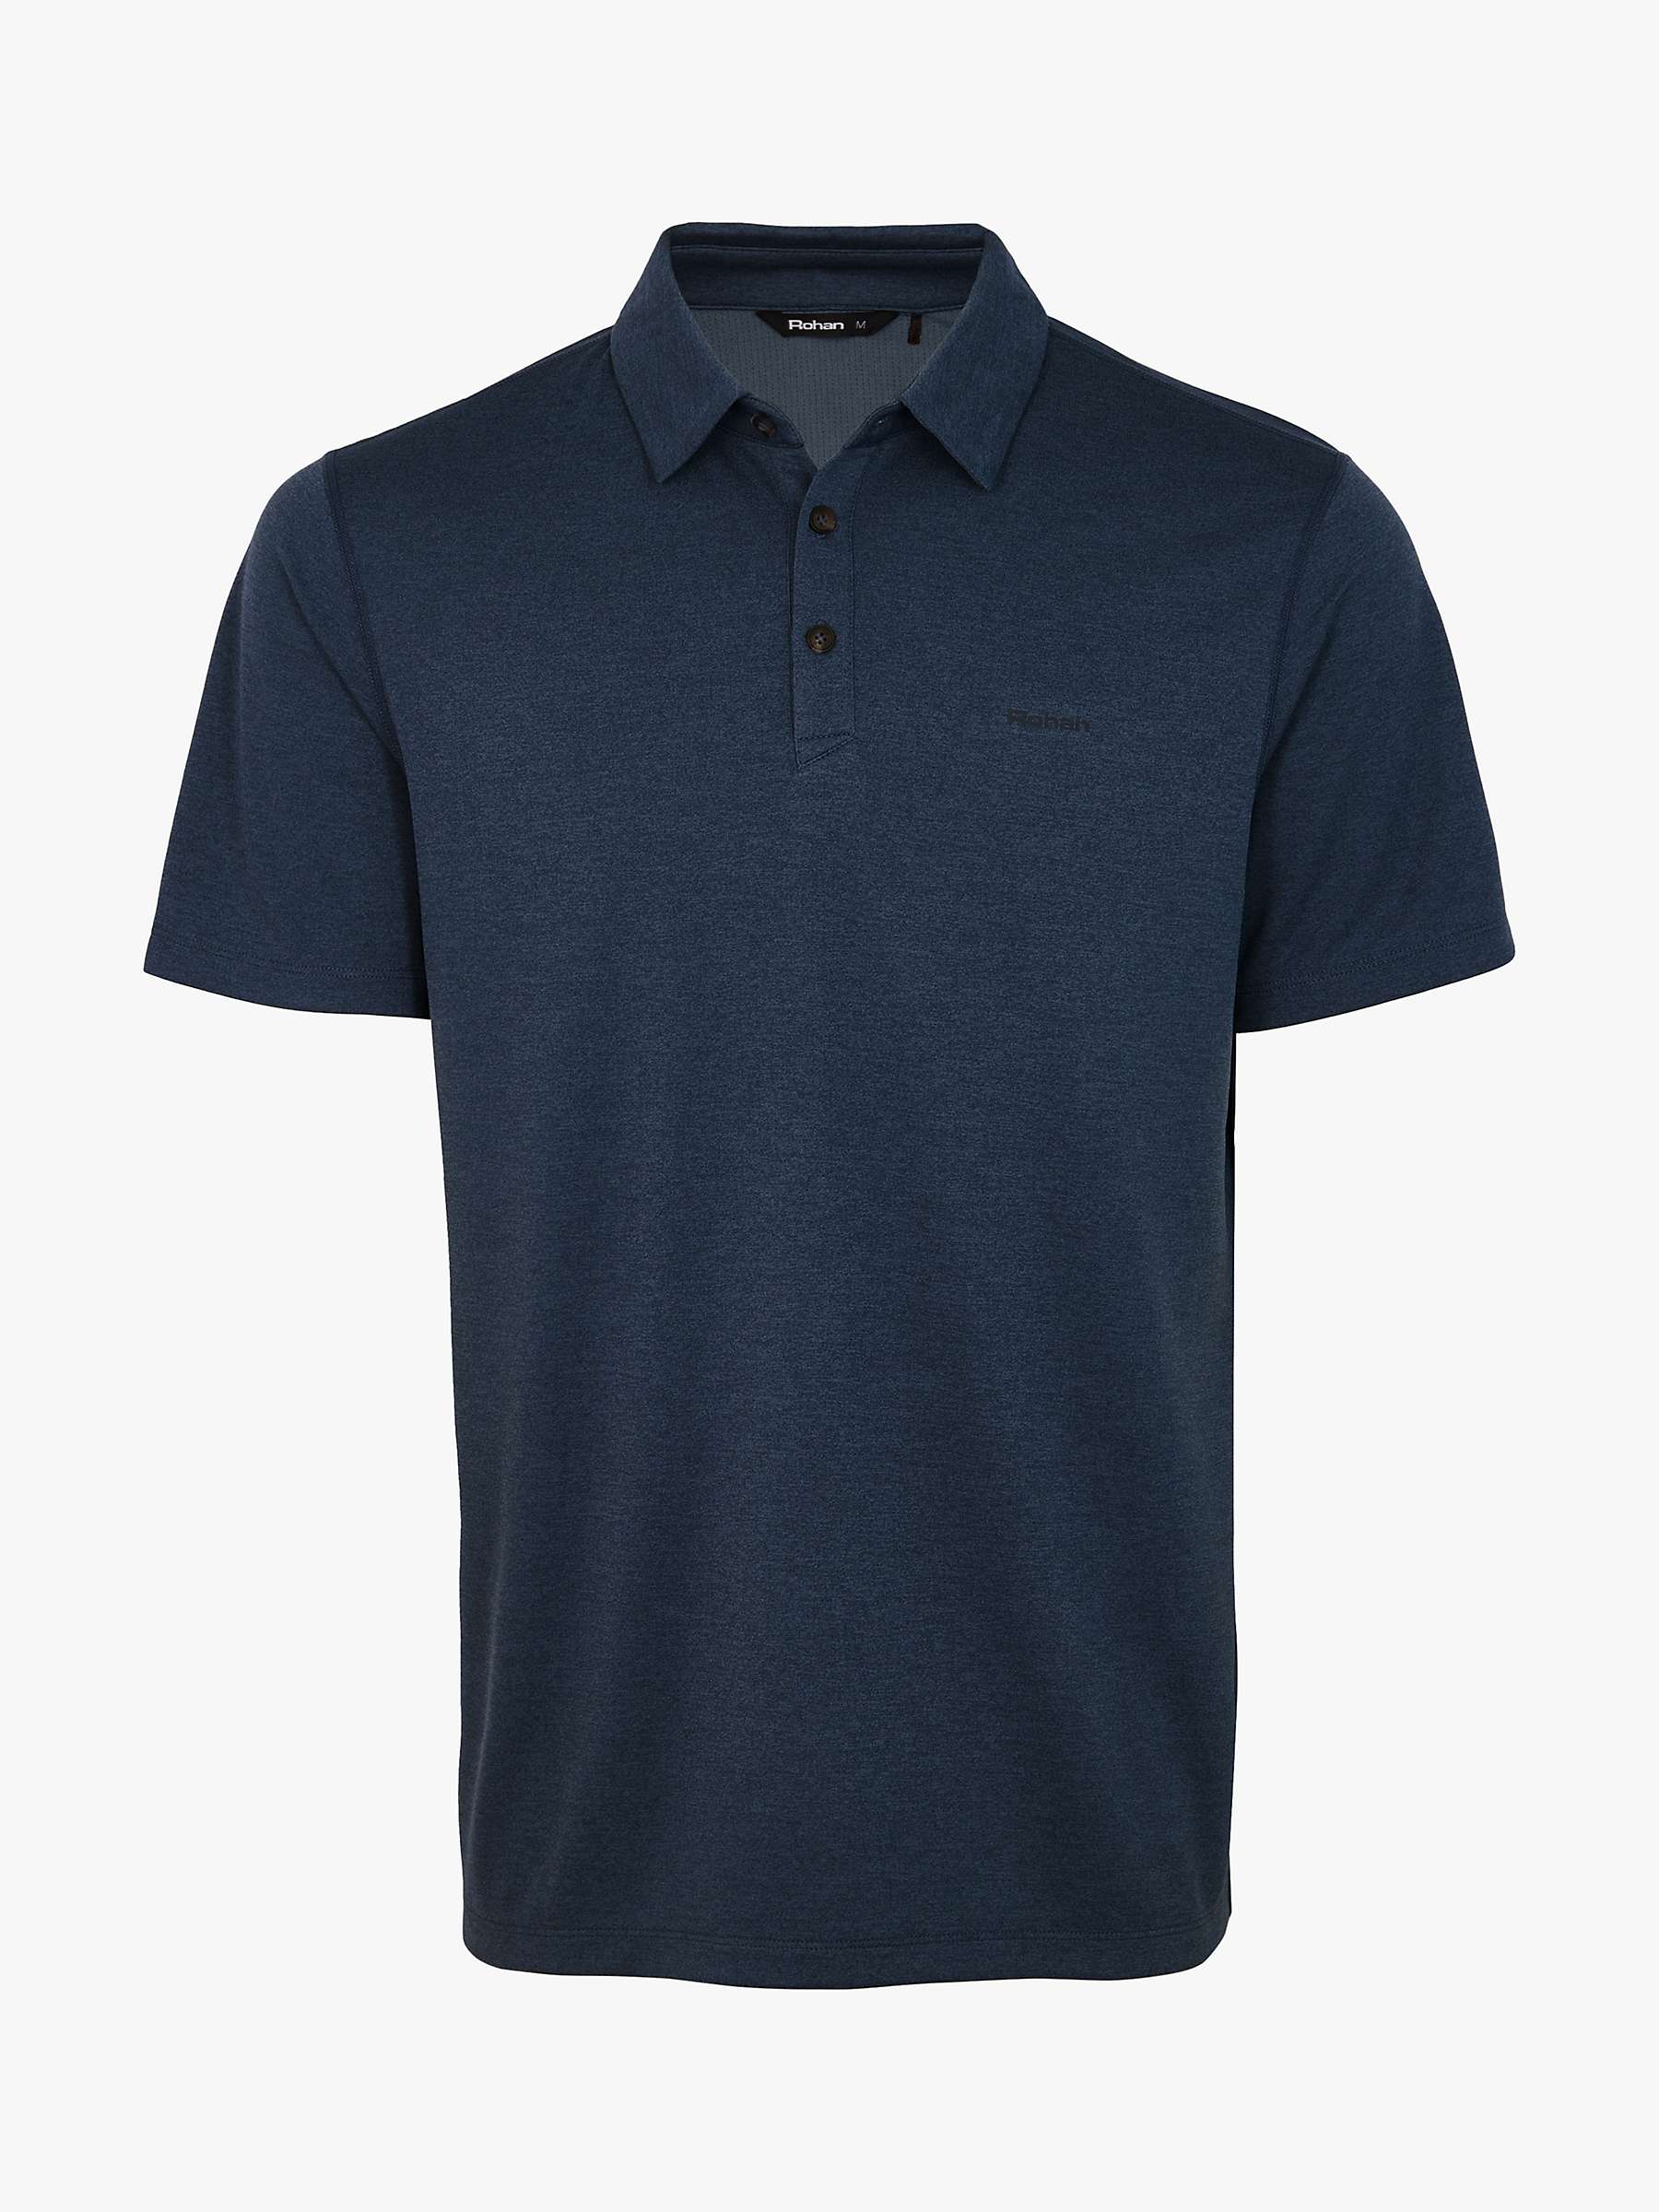 Rohan Dale Short Sleeve Polo Shirt, True Navy at John Lewis & Partners